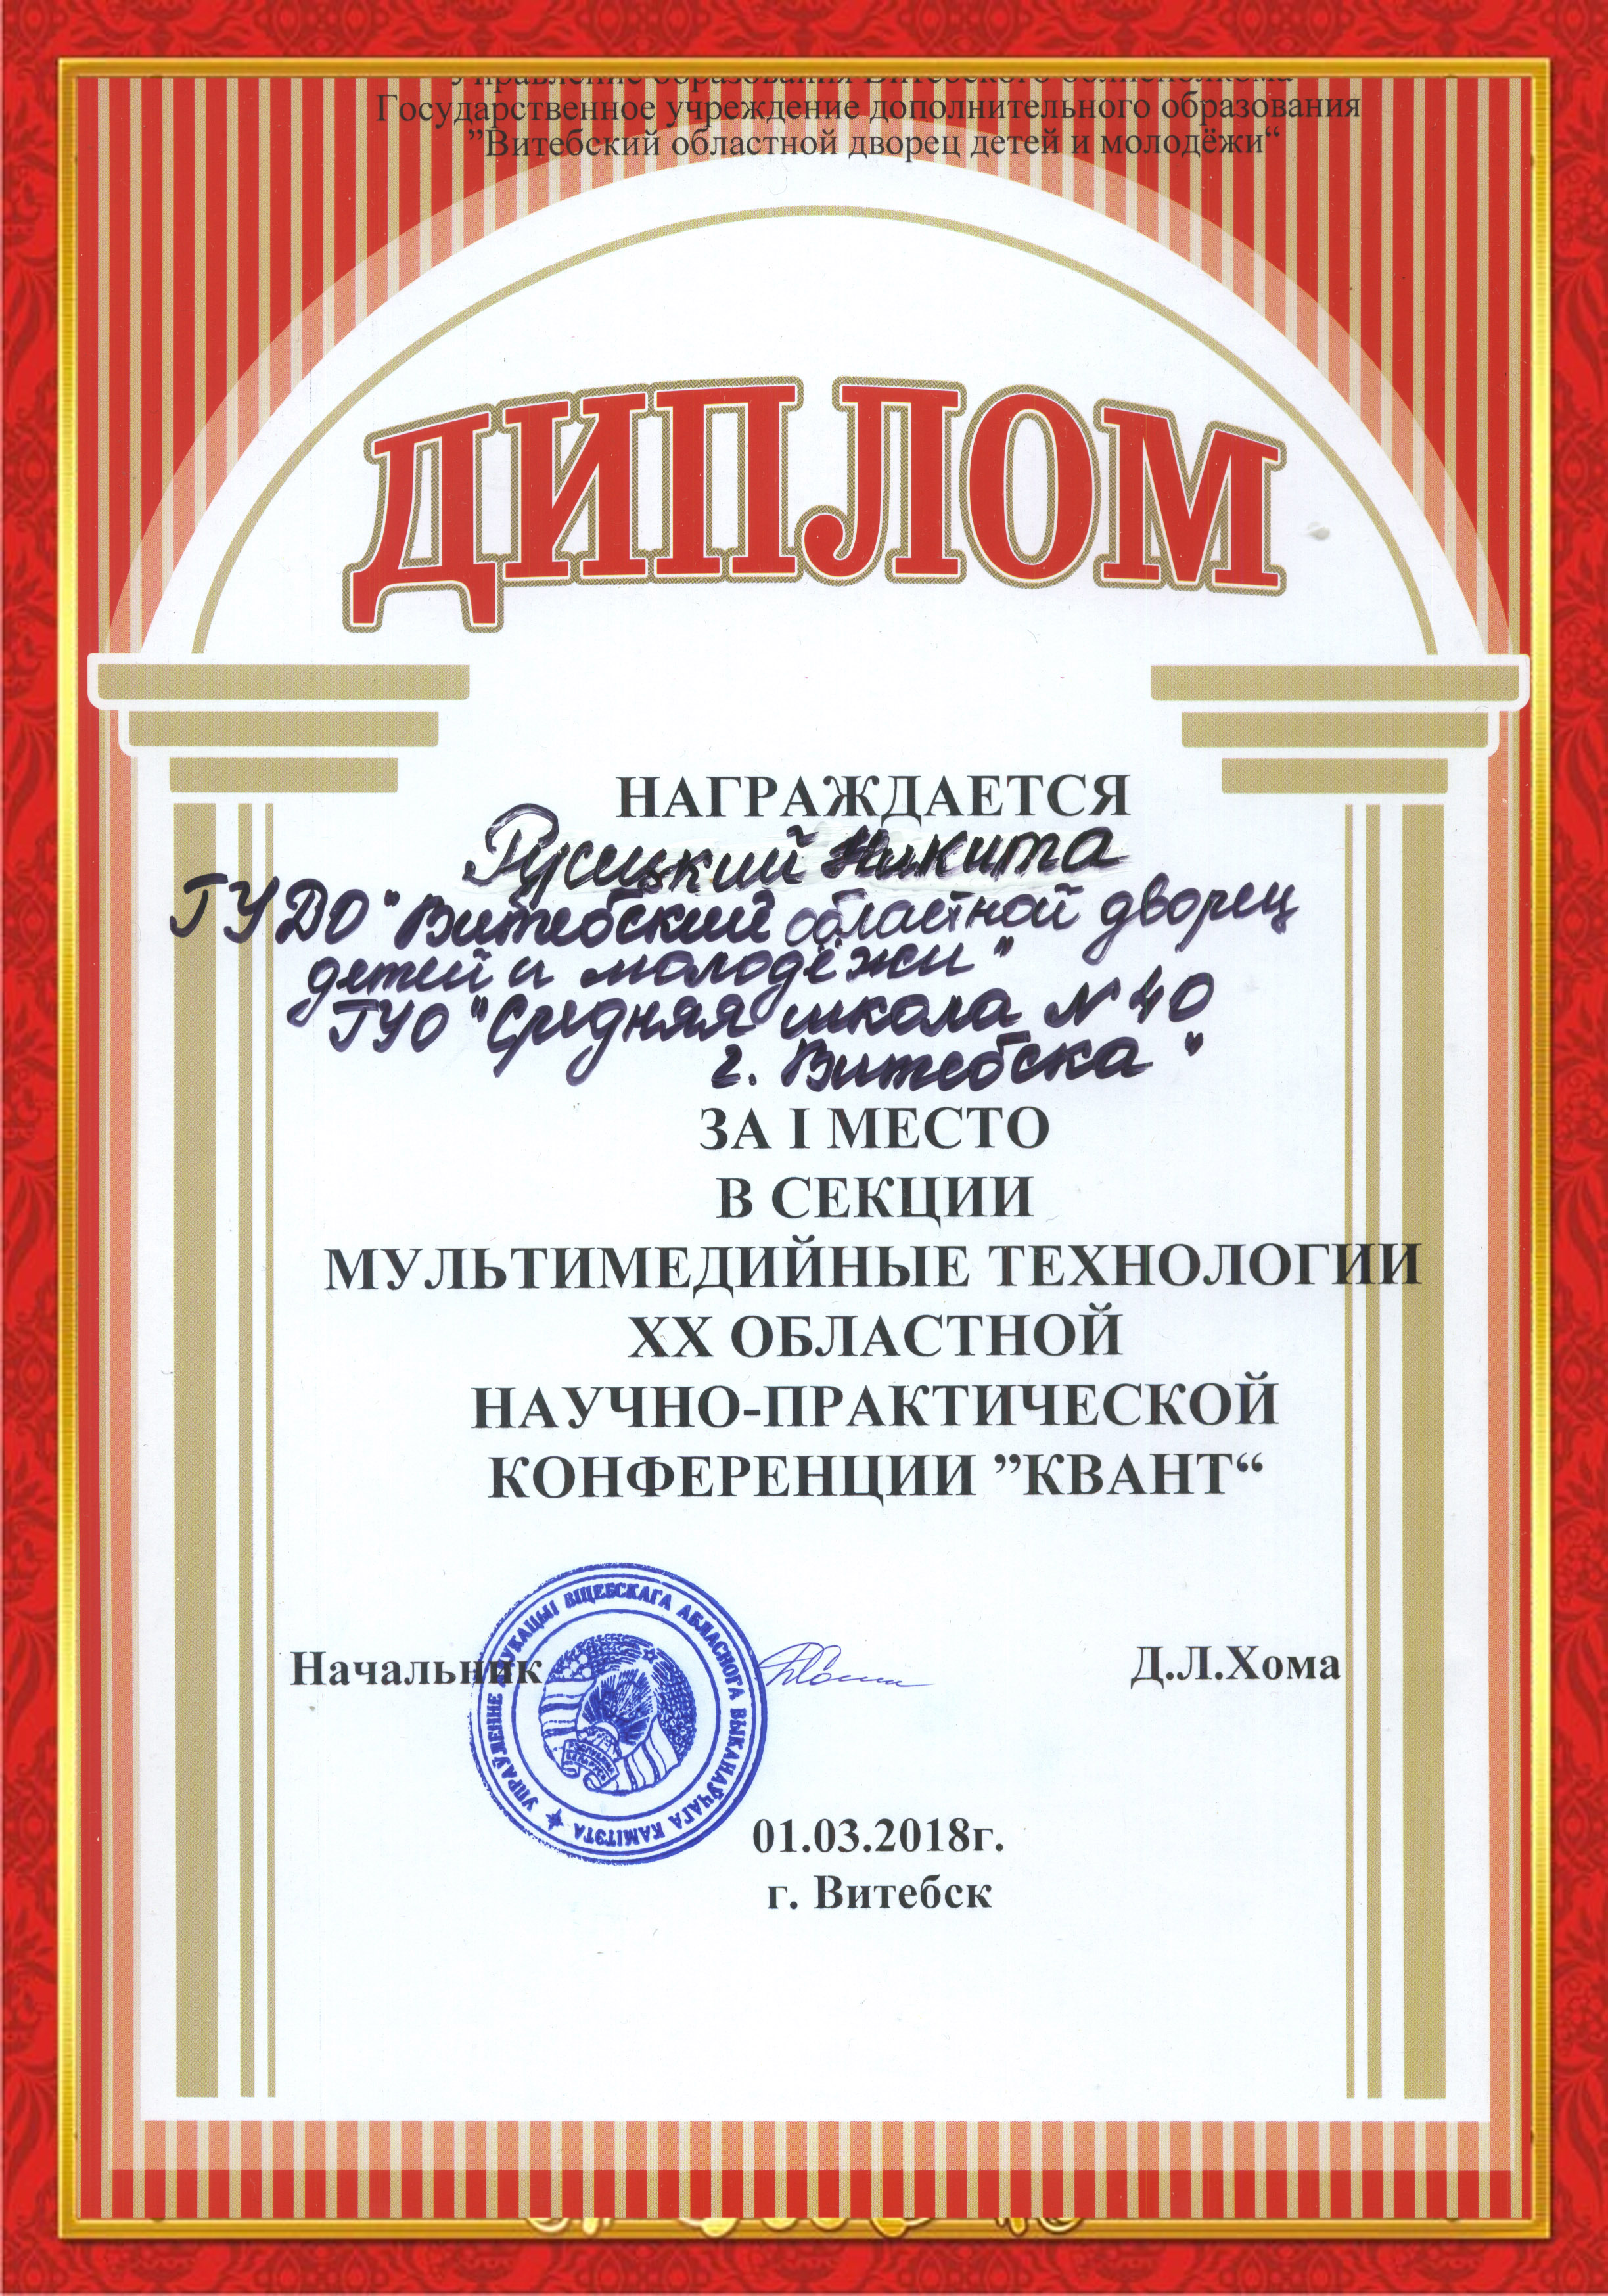 Diplom Rusetsky KVANTobl 2018